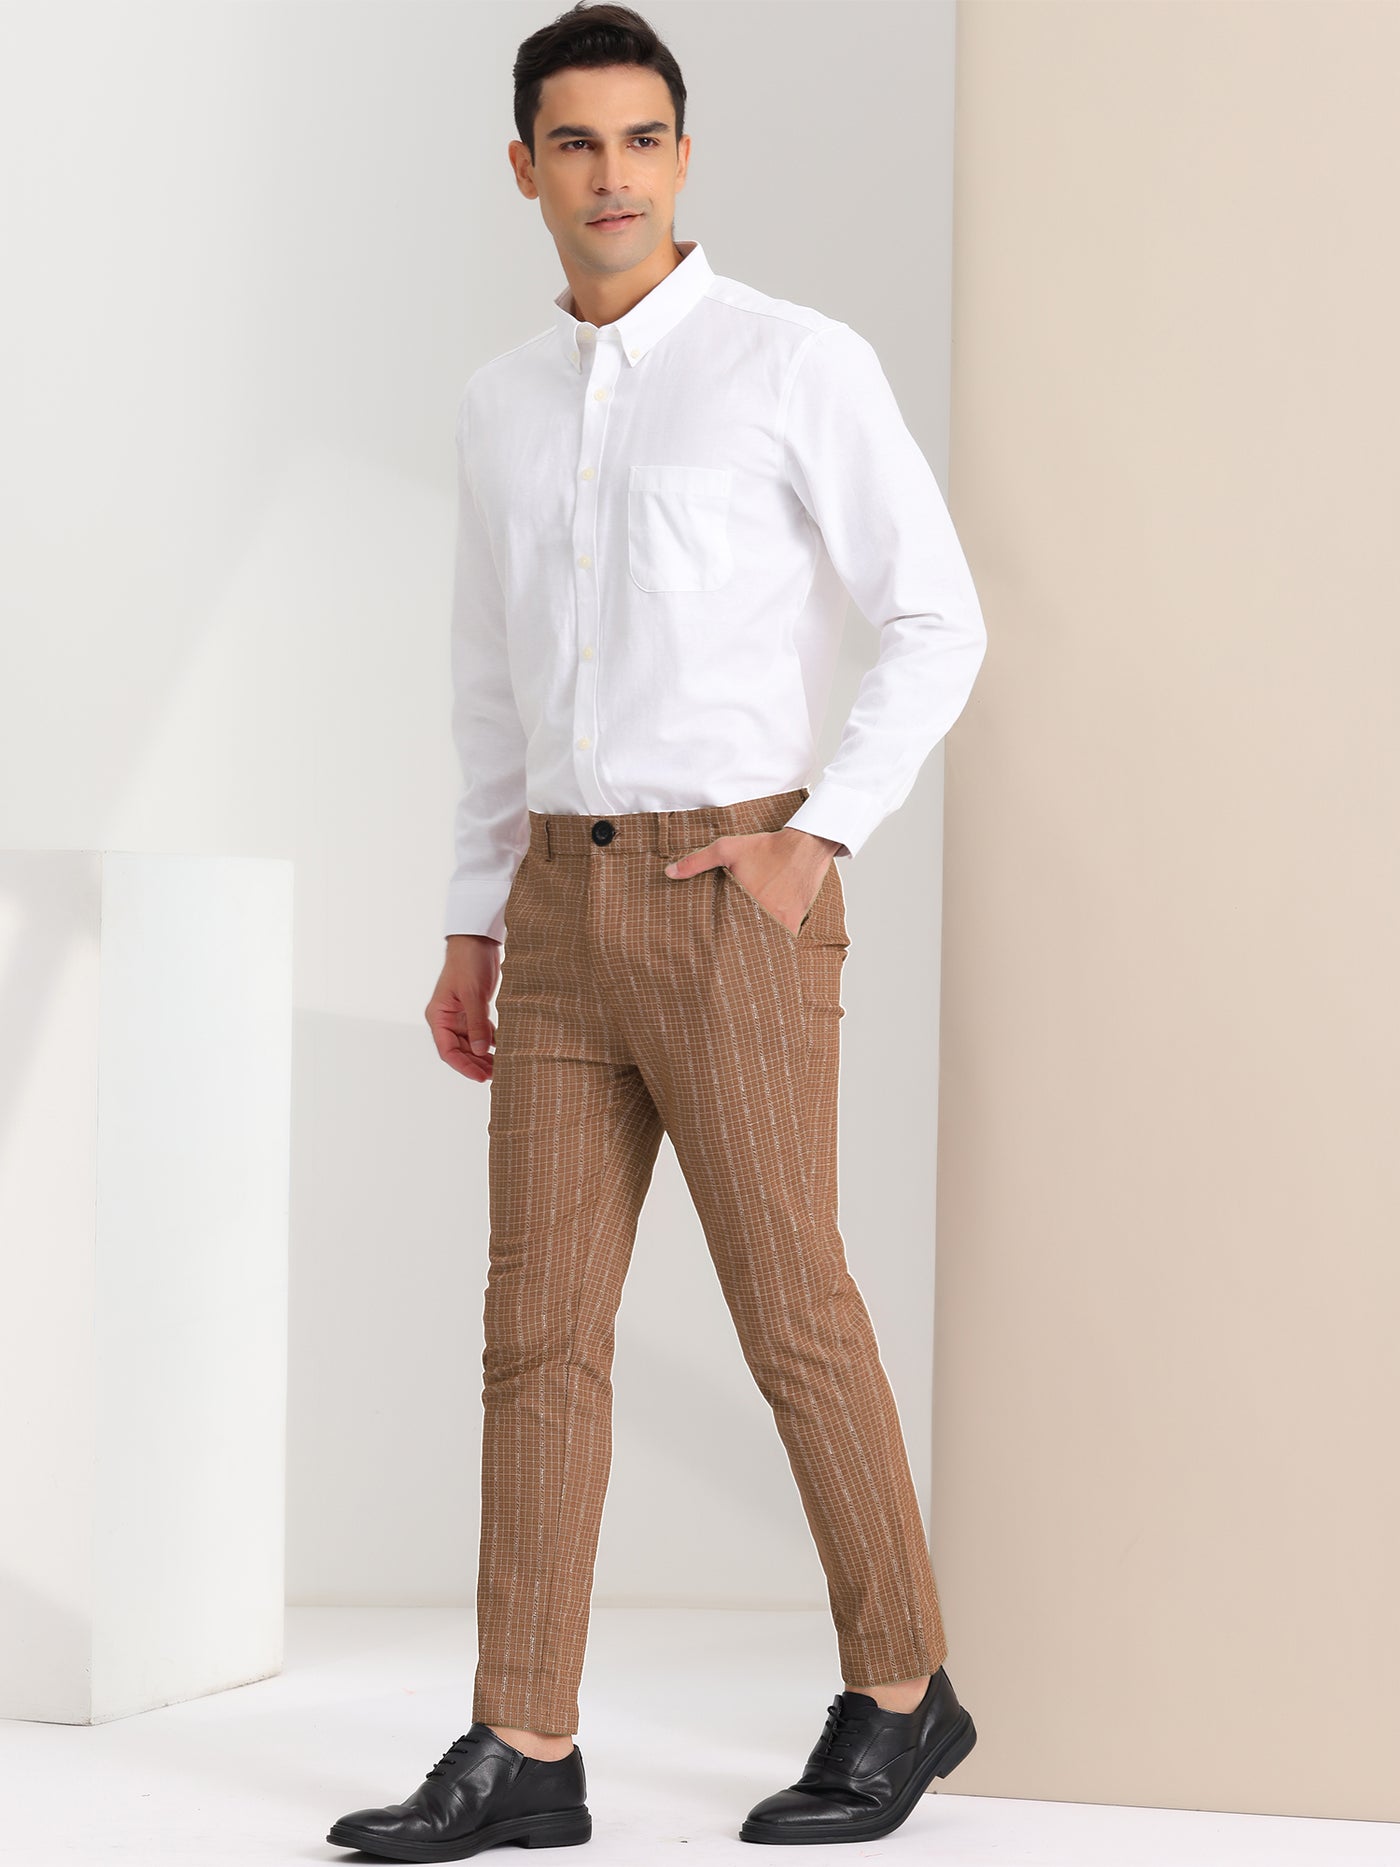 Bublédon Men's Plaid Slim Fit Office Prom Stripe Printed Dress Pants